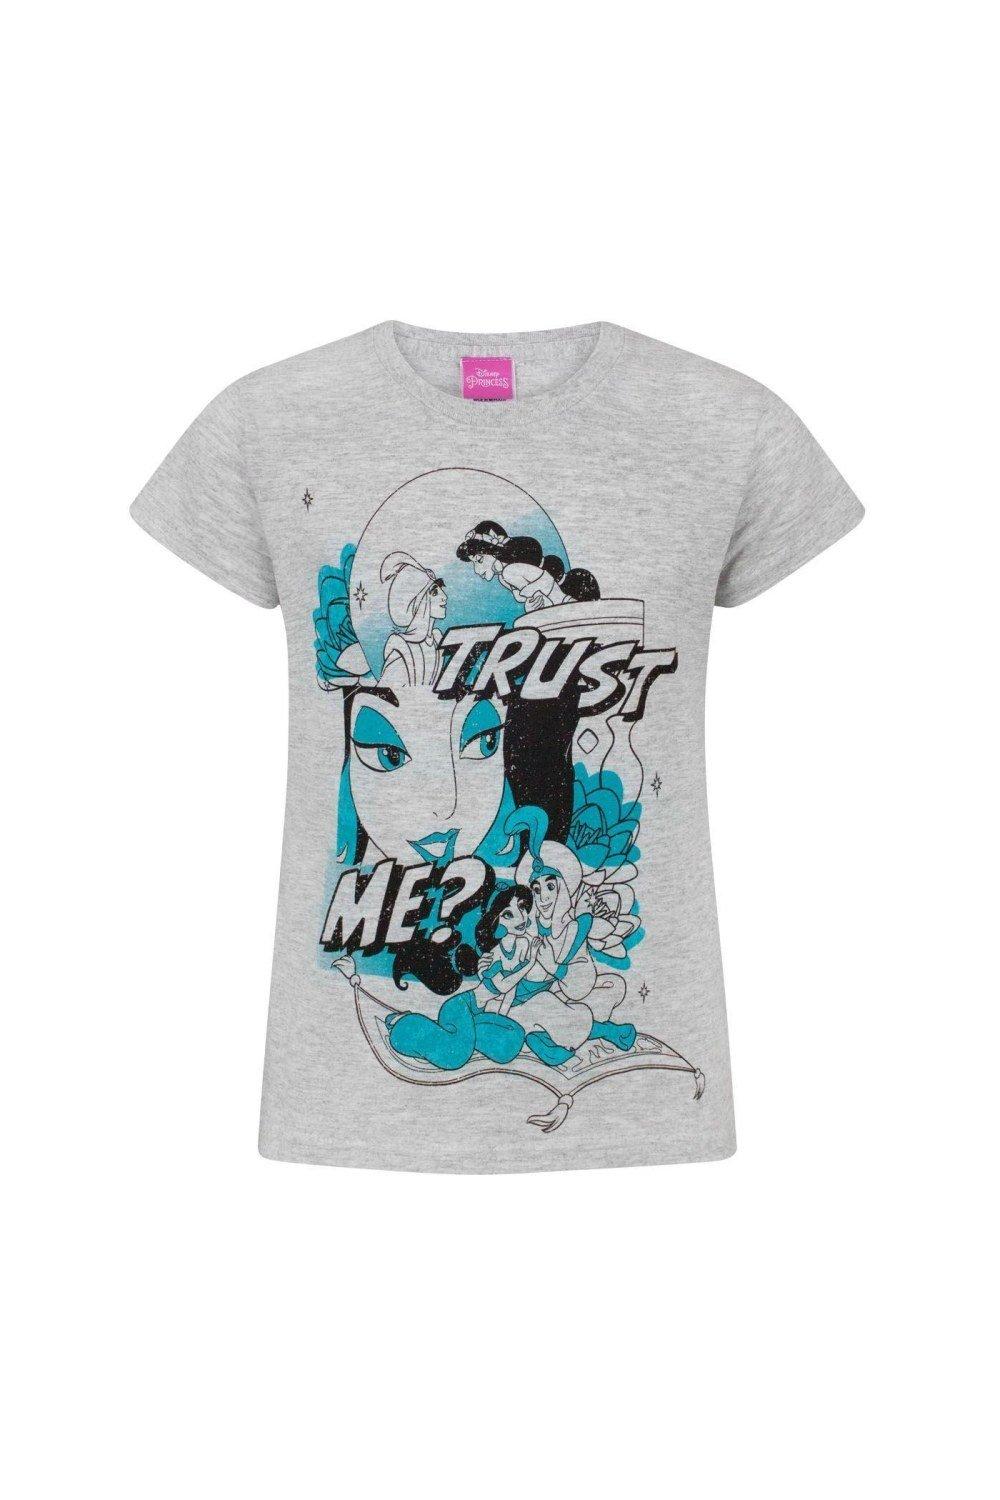 Trust Me Jasmine T-Shirt